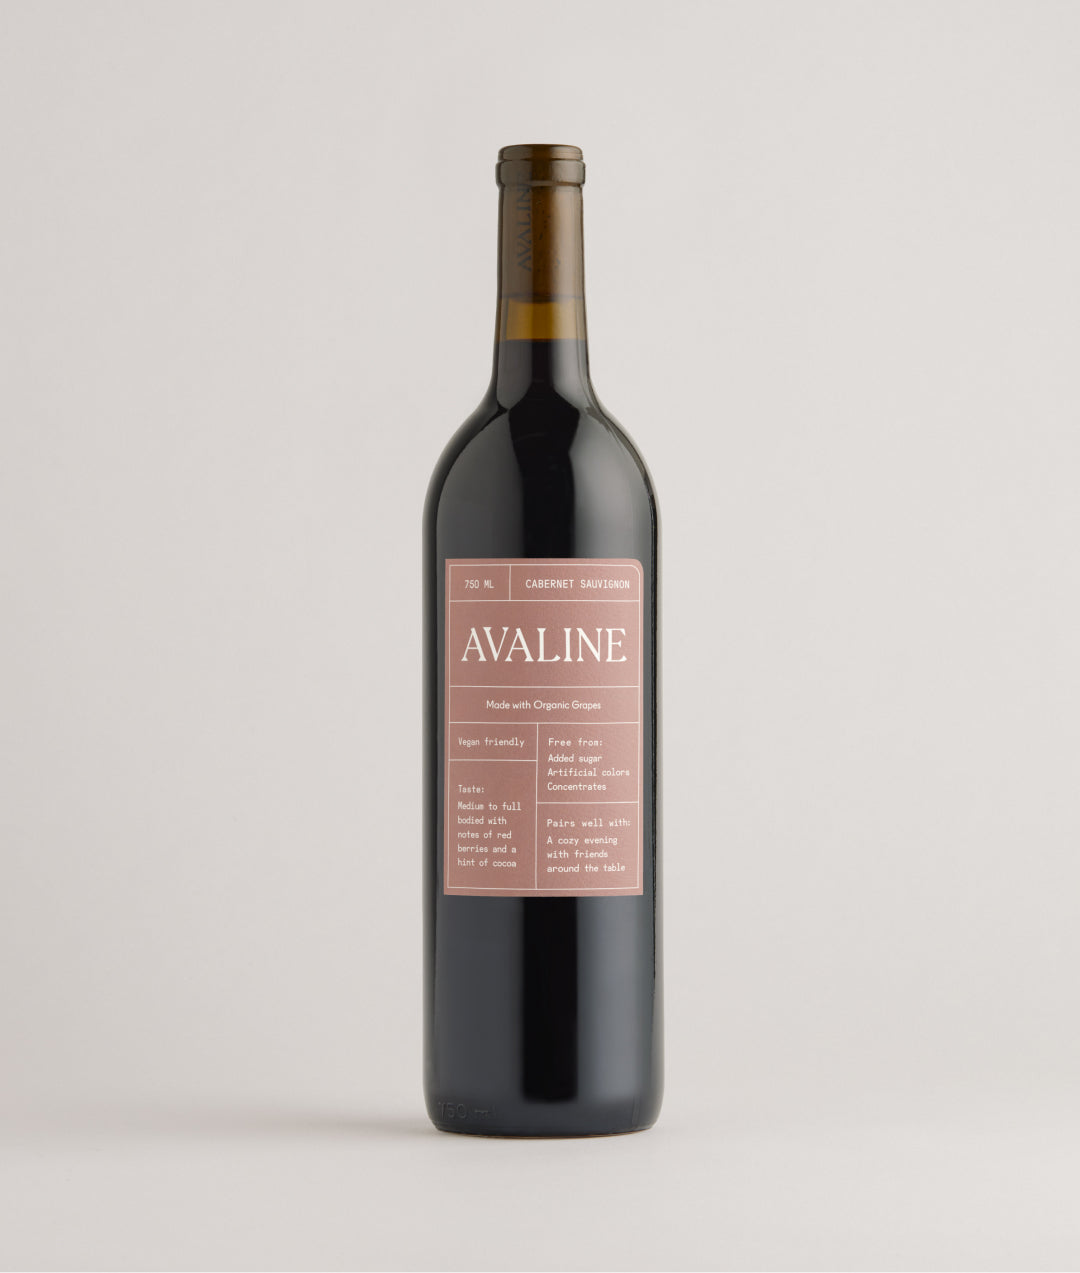 Avaline Cabernet Sauvignon wine